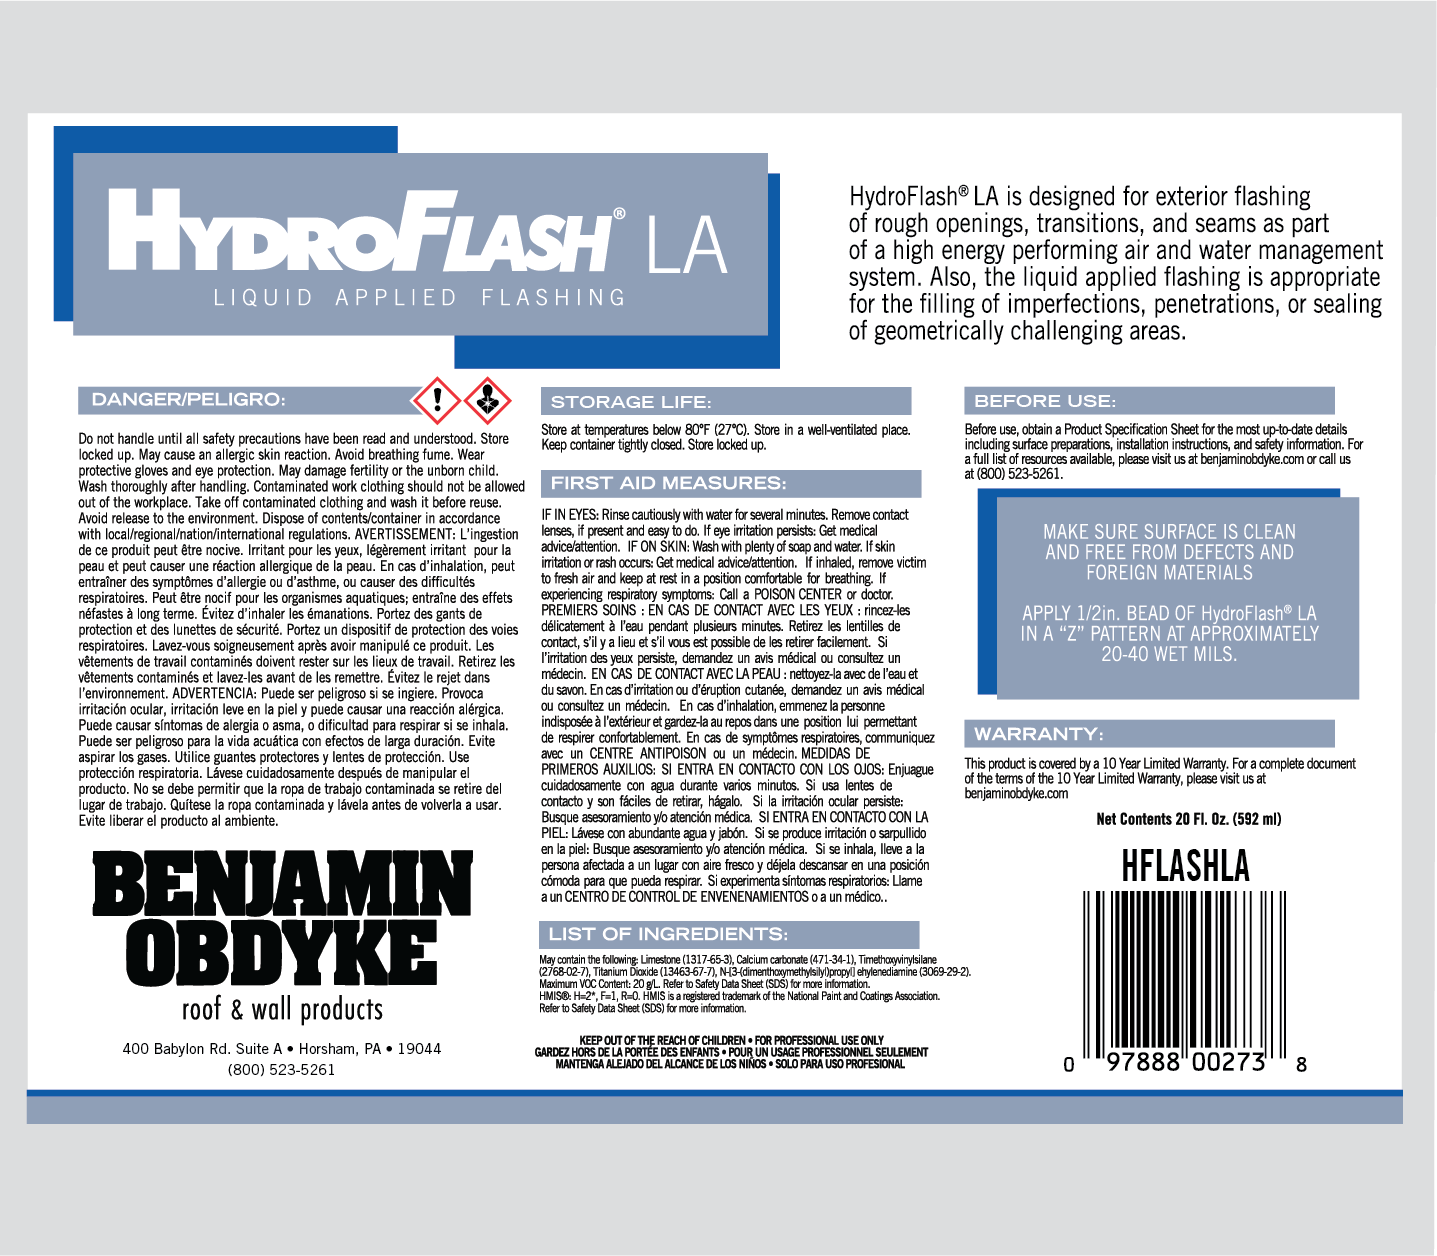 hydroflashla packaging opened